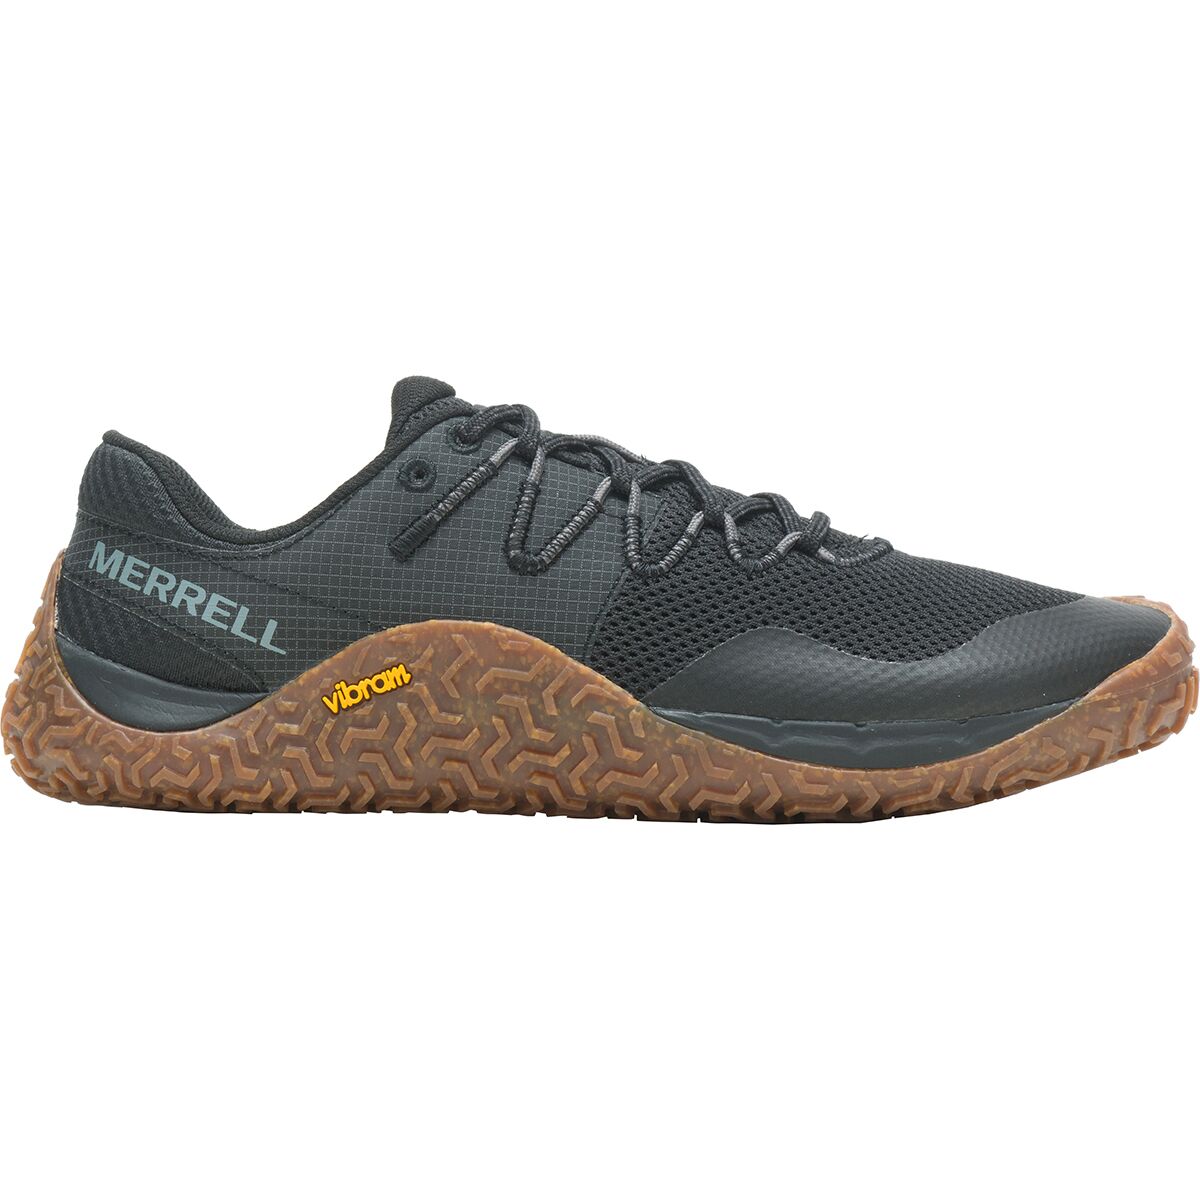 Merrell Trail Glove 7 Running Shoe - Men's